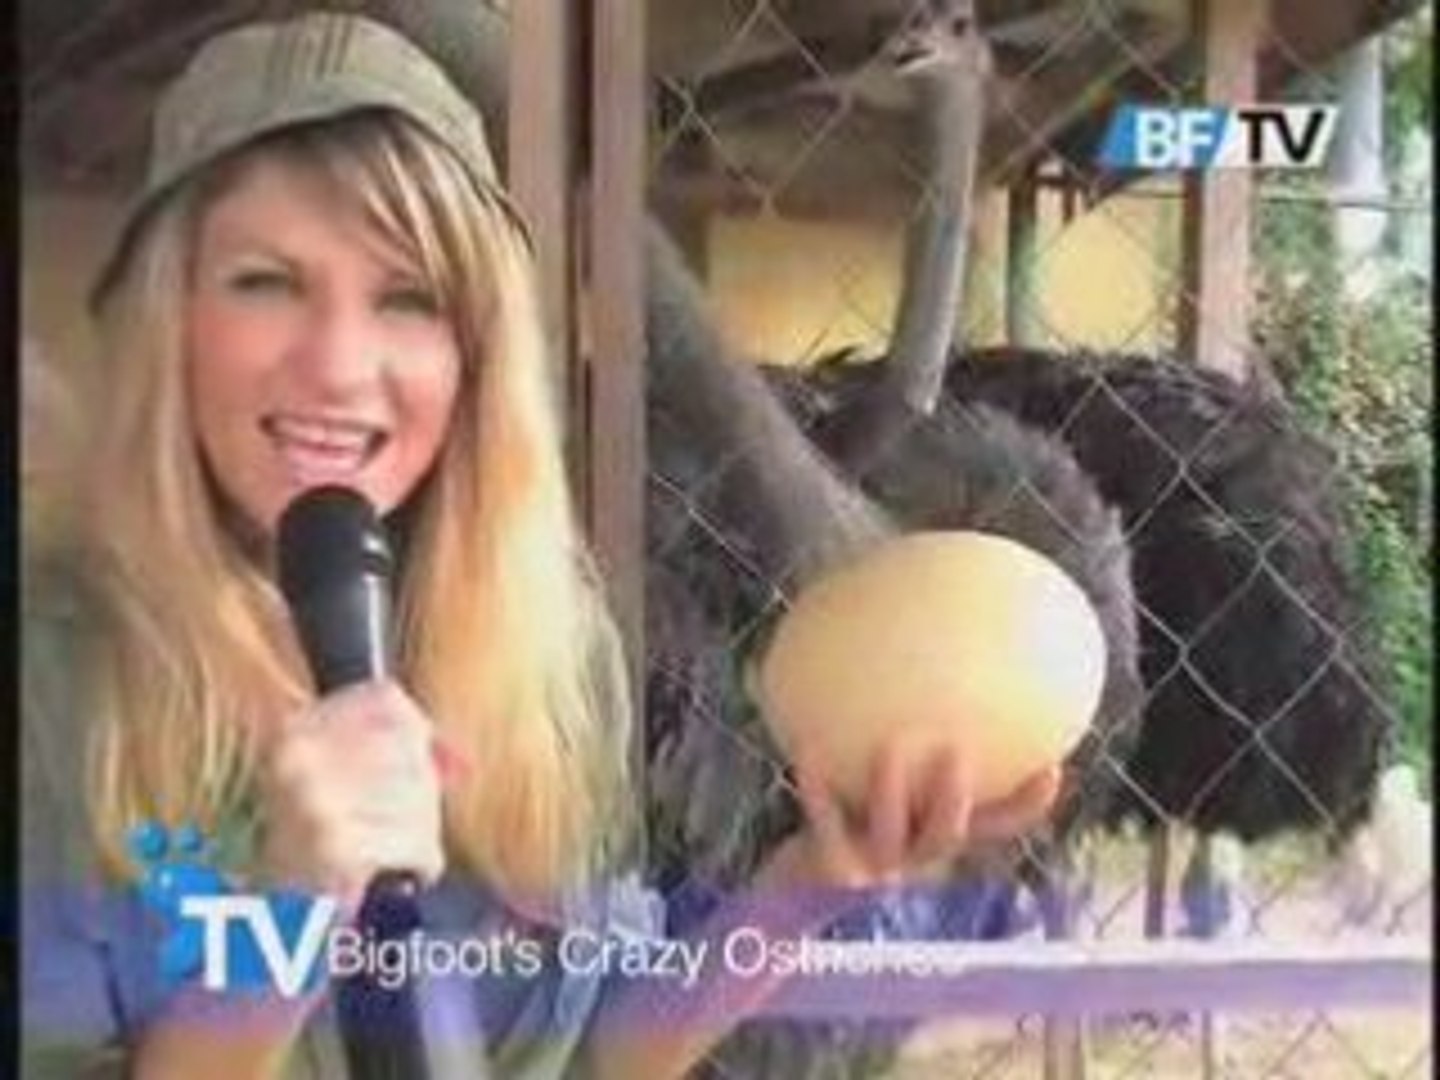 Bigfoot's Crazy Ostriches